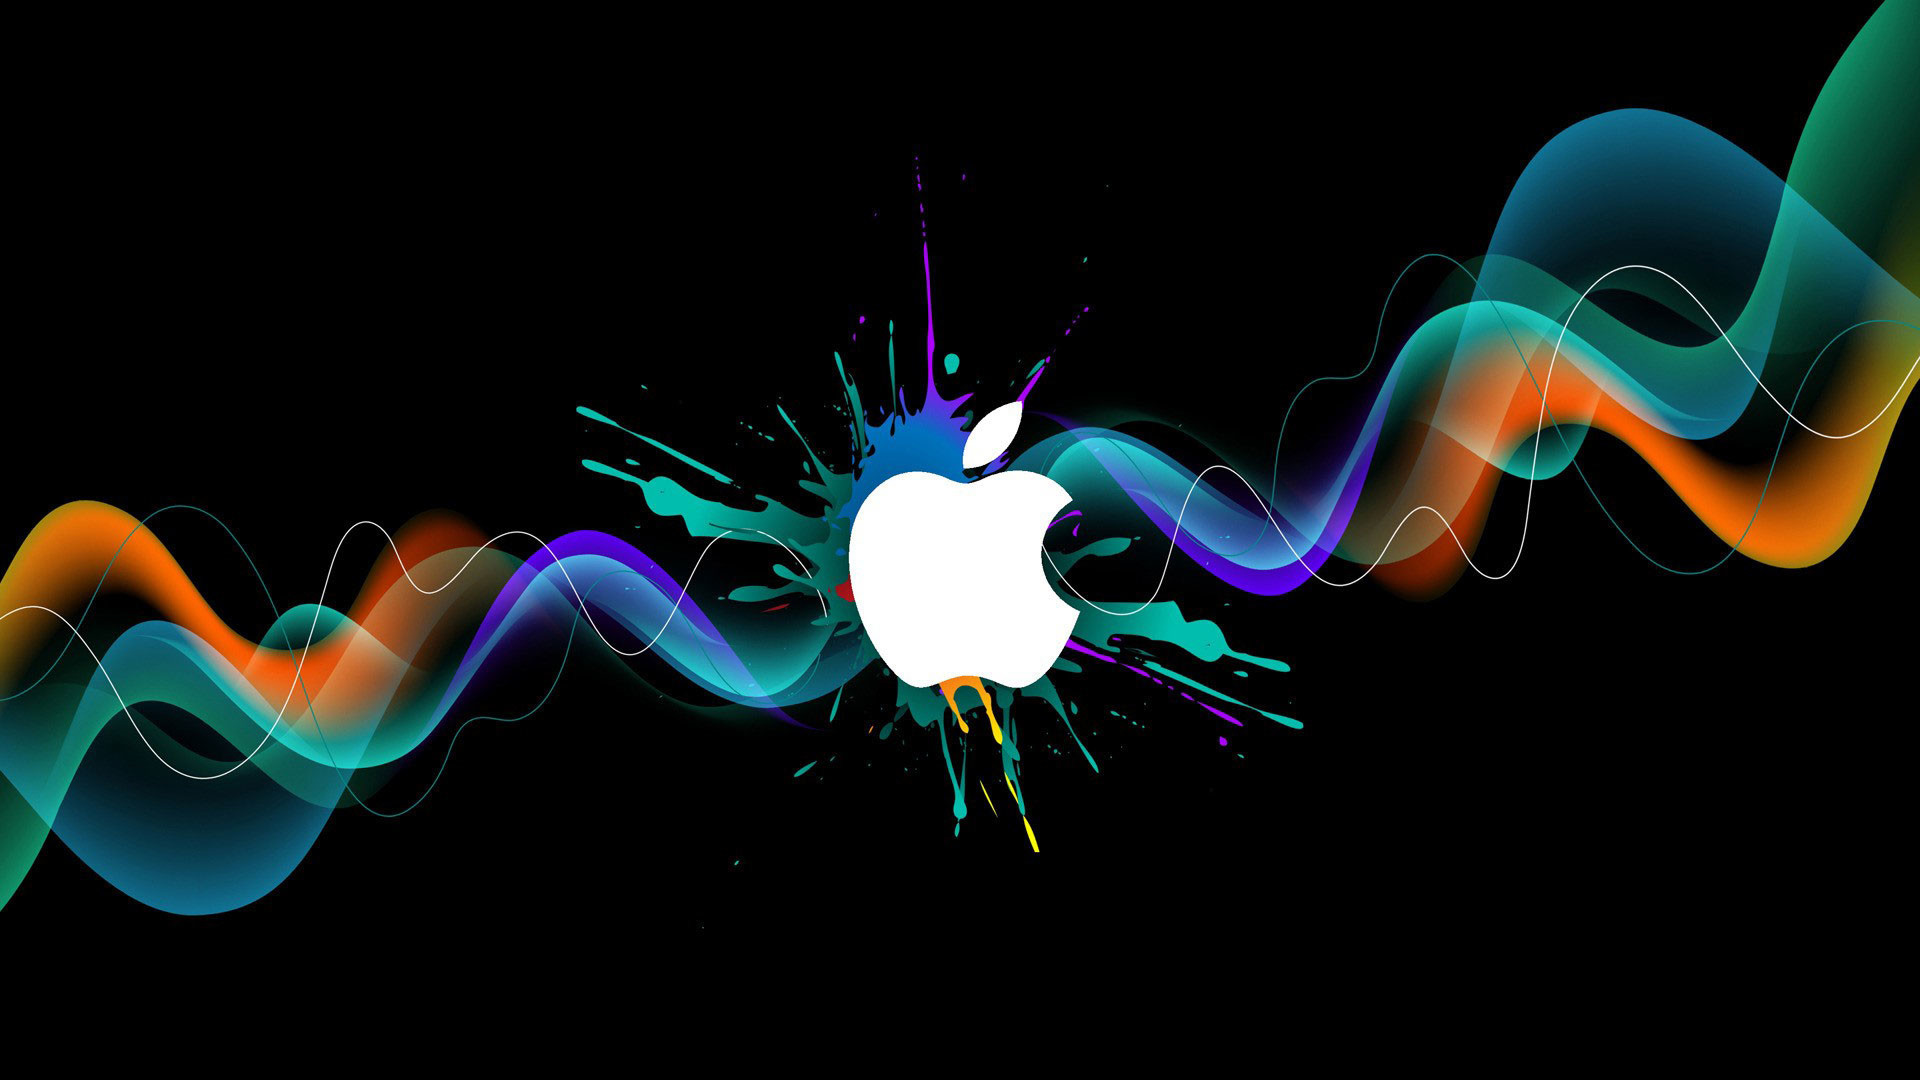 Apple Logo HD Wallpaper (78+ images)